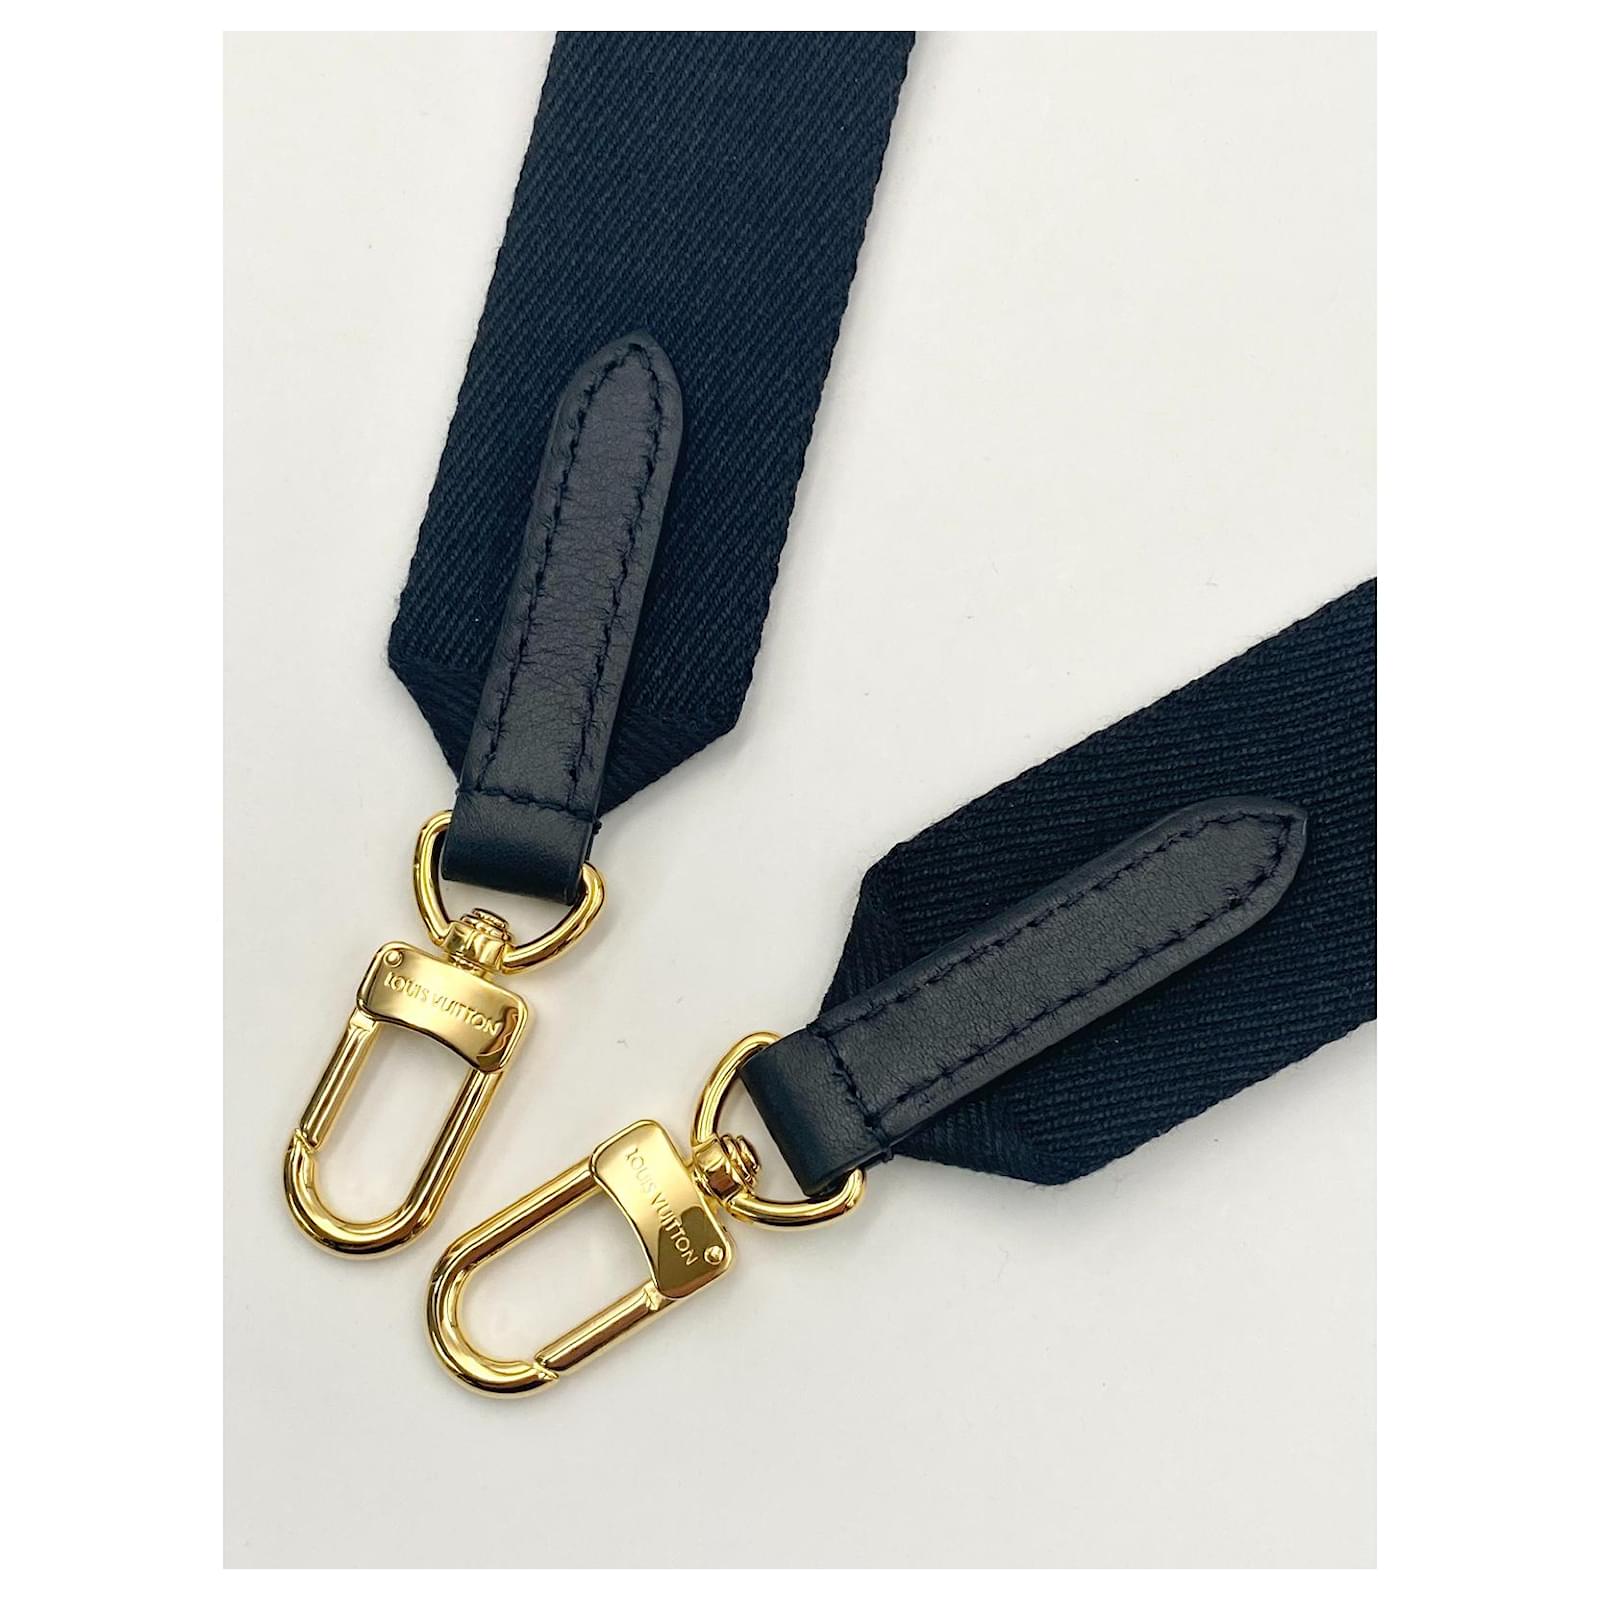 Removable adjustable Louis Vuitton Coussin shoulder strap in black